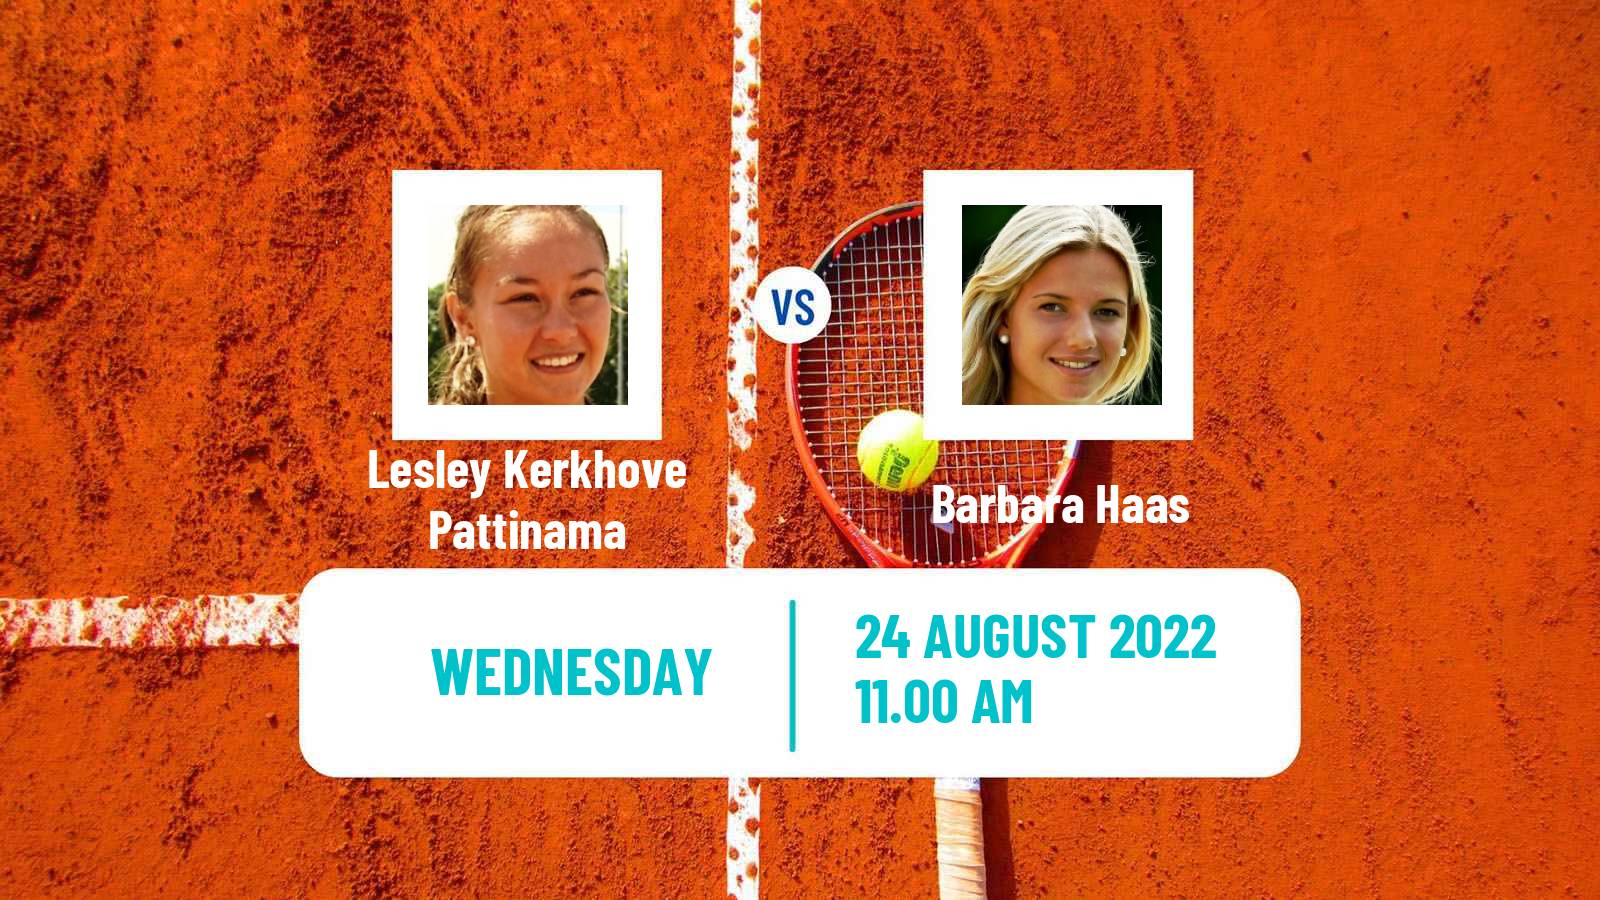 Tennis WTA US Open Lesley Kerkhove Pattinama - Barbara Haas